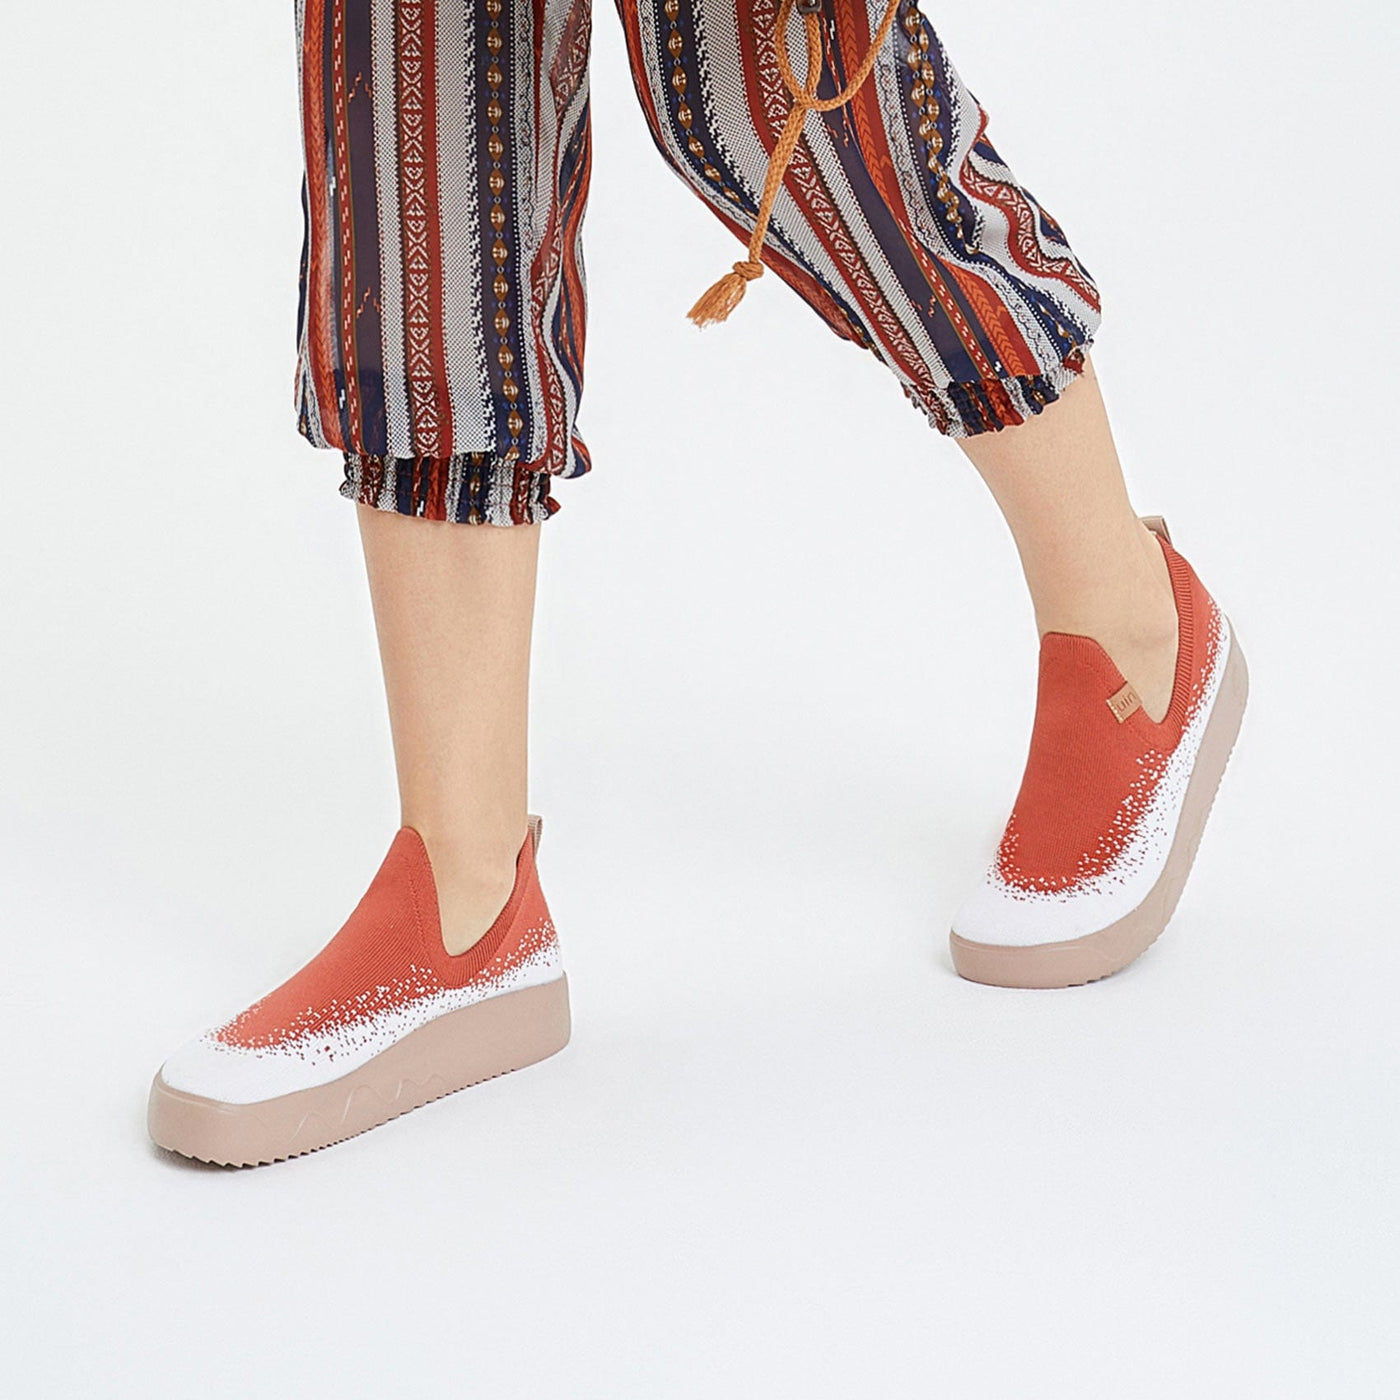 UIN Footwear Women Red Chilli Fuerteventura I Women Canvas loafers